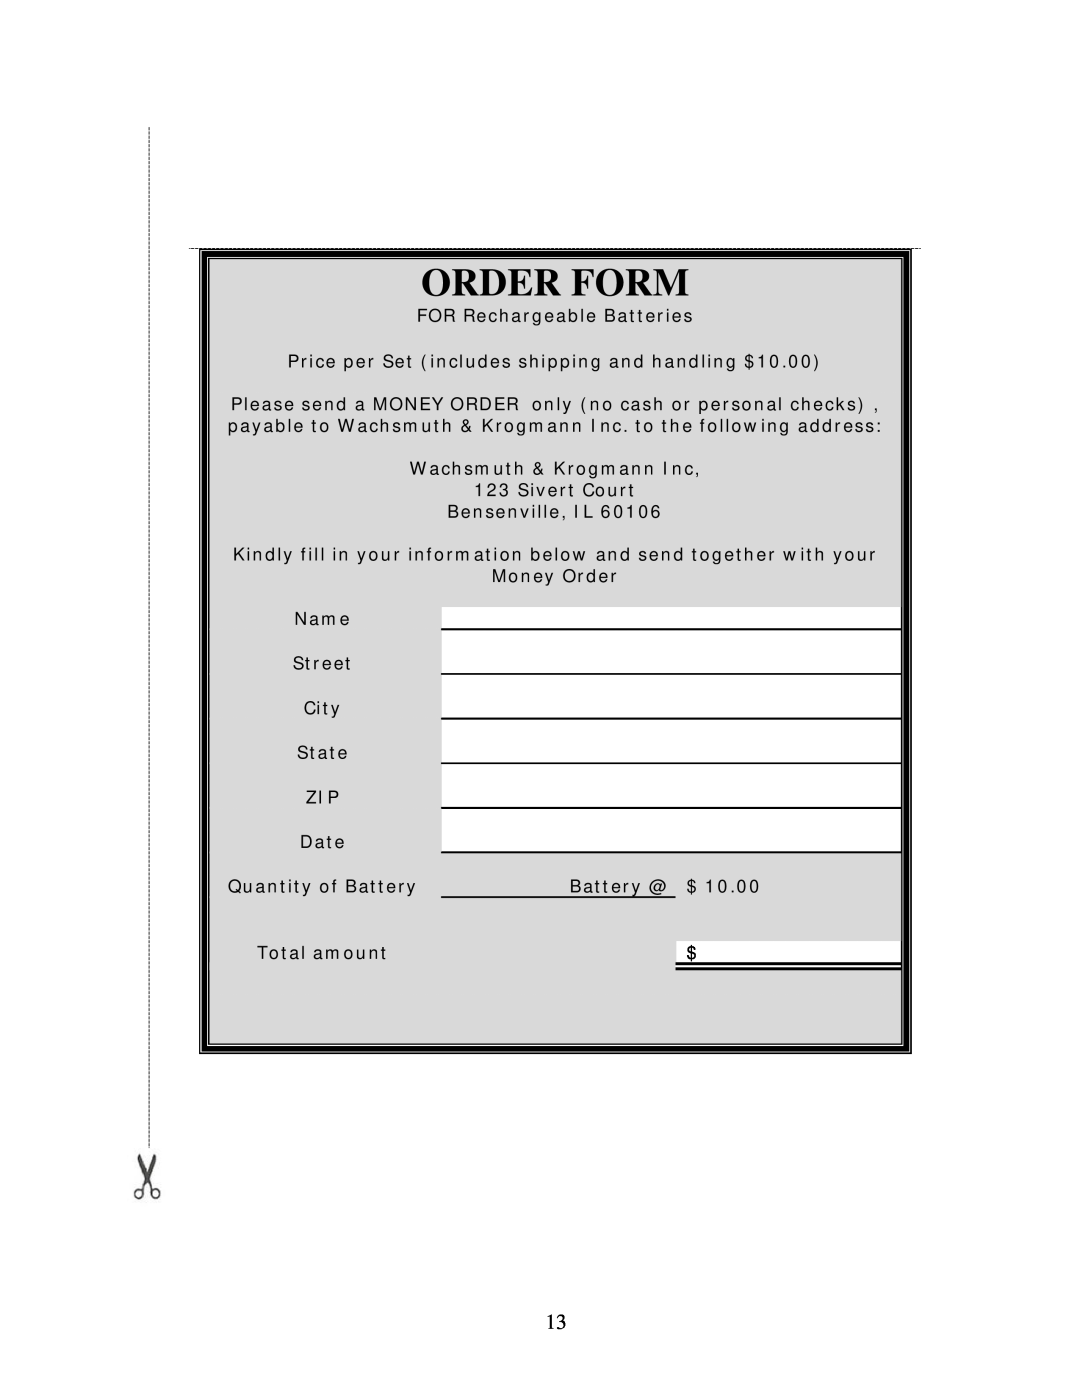 Wachsmuth & Krogmann Item# 7256 manual Order Form 